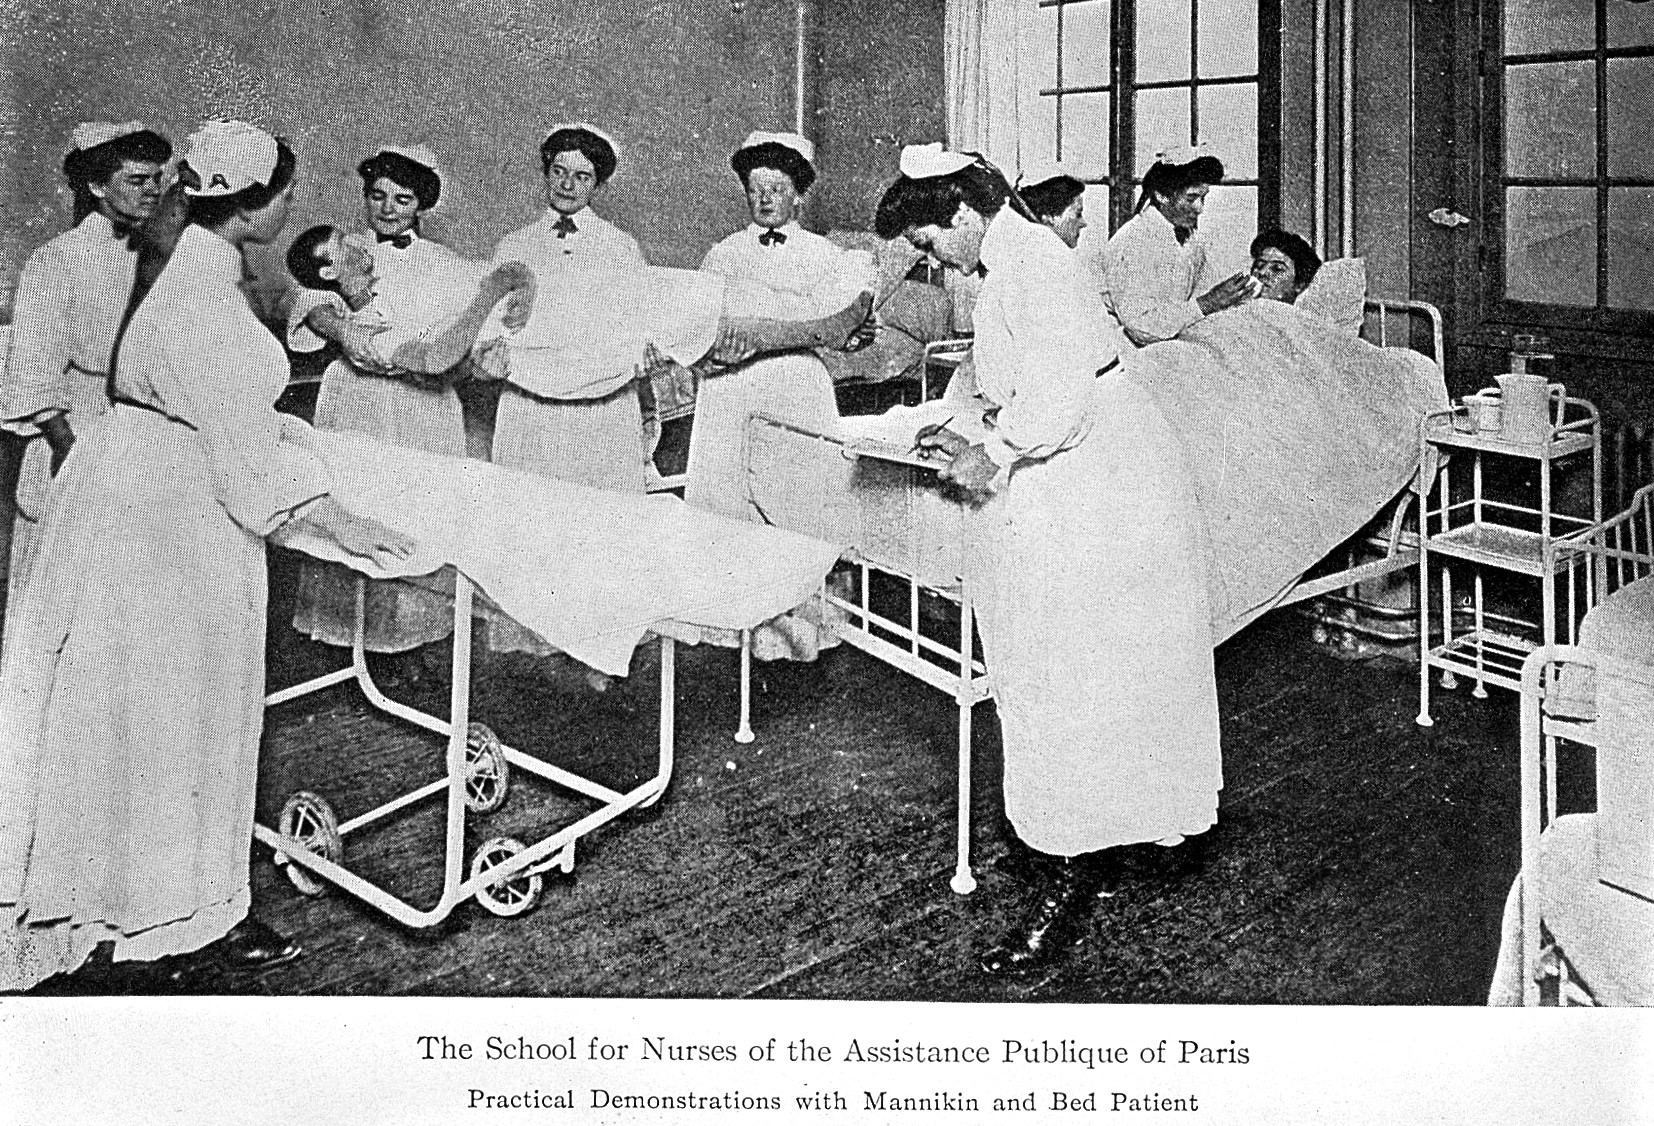 https://upload.wikimedia.org/wikipedia/commons/8/86/The_school_for_nurses%2C_Paris%3B_A_history_of_nursing%2C_1912_Wellcome_L0001677.jpg